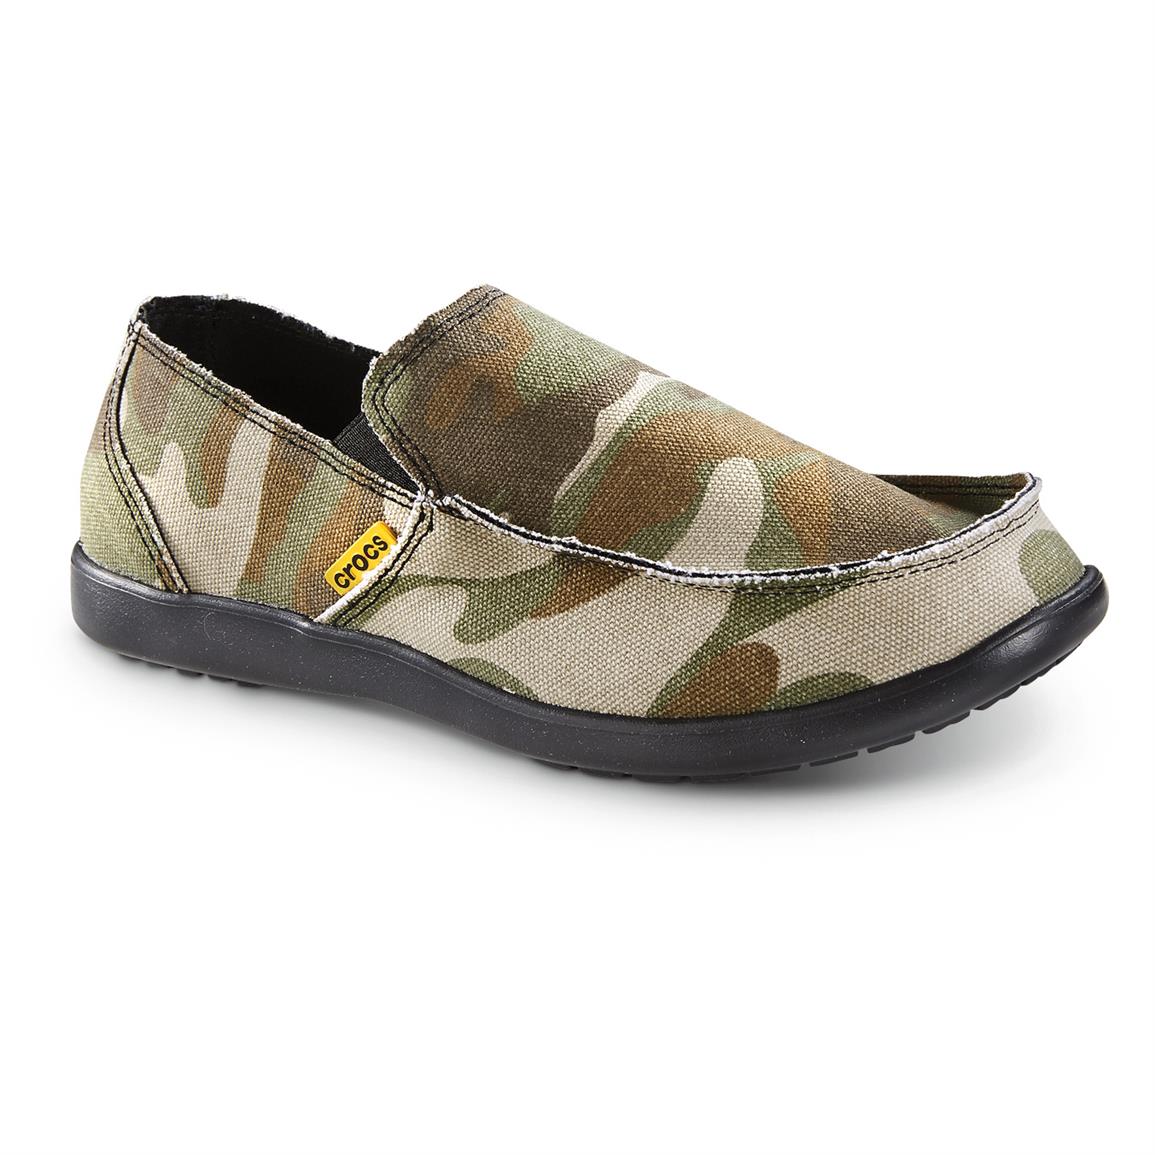  Crocs  Santa Cruz Slip on Shoes Camo Green 637625 